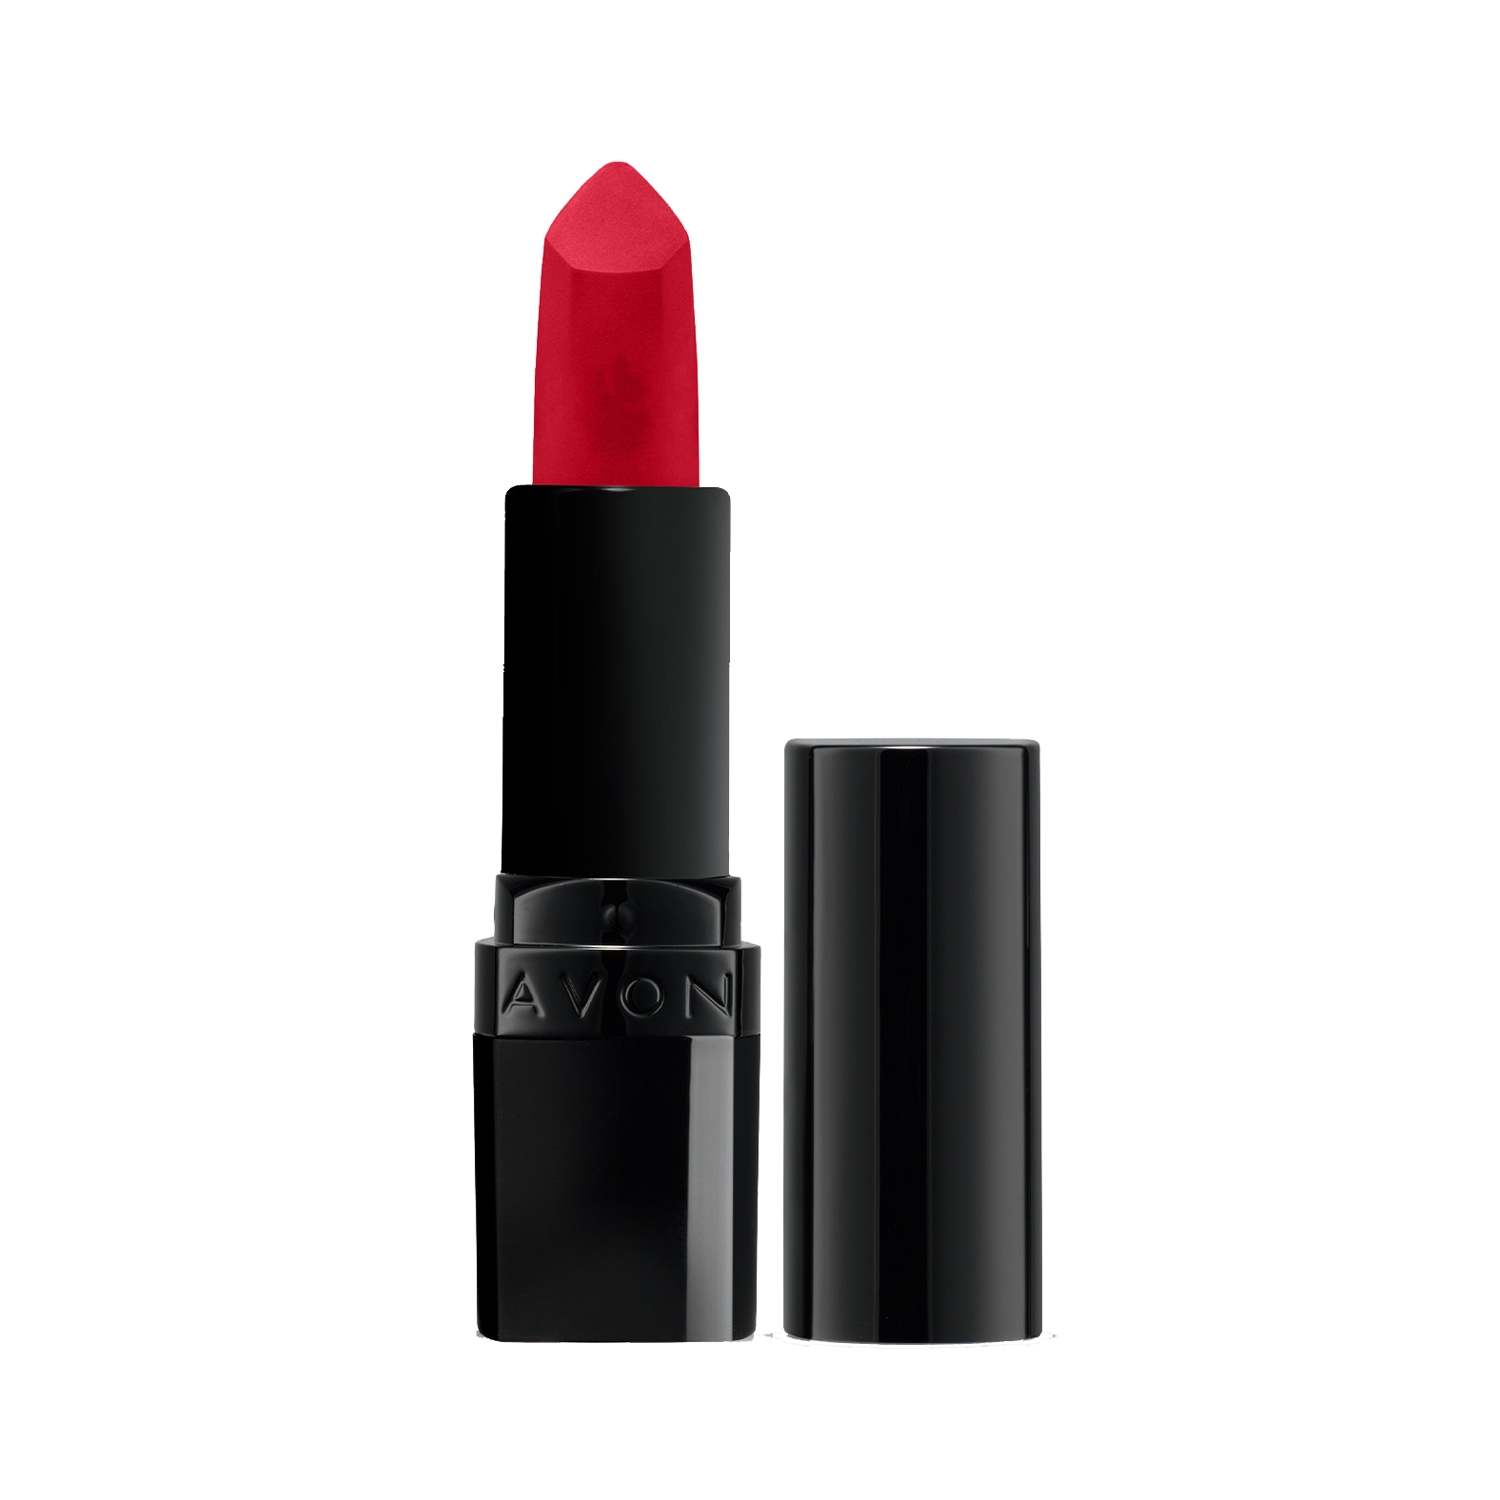 Avon | Avon Ultra Perfectly Matte Lipstick - Coral Fever (4g)